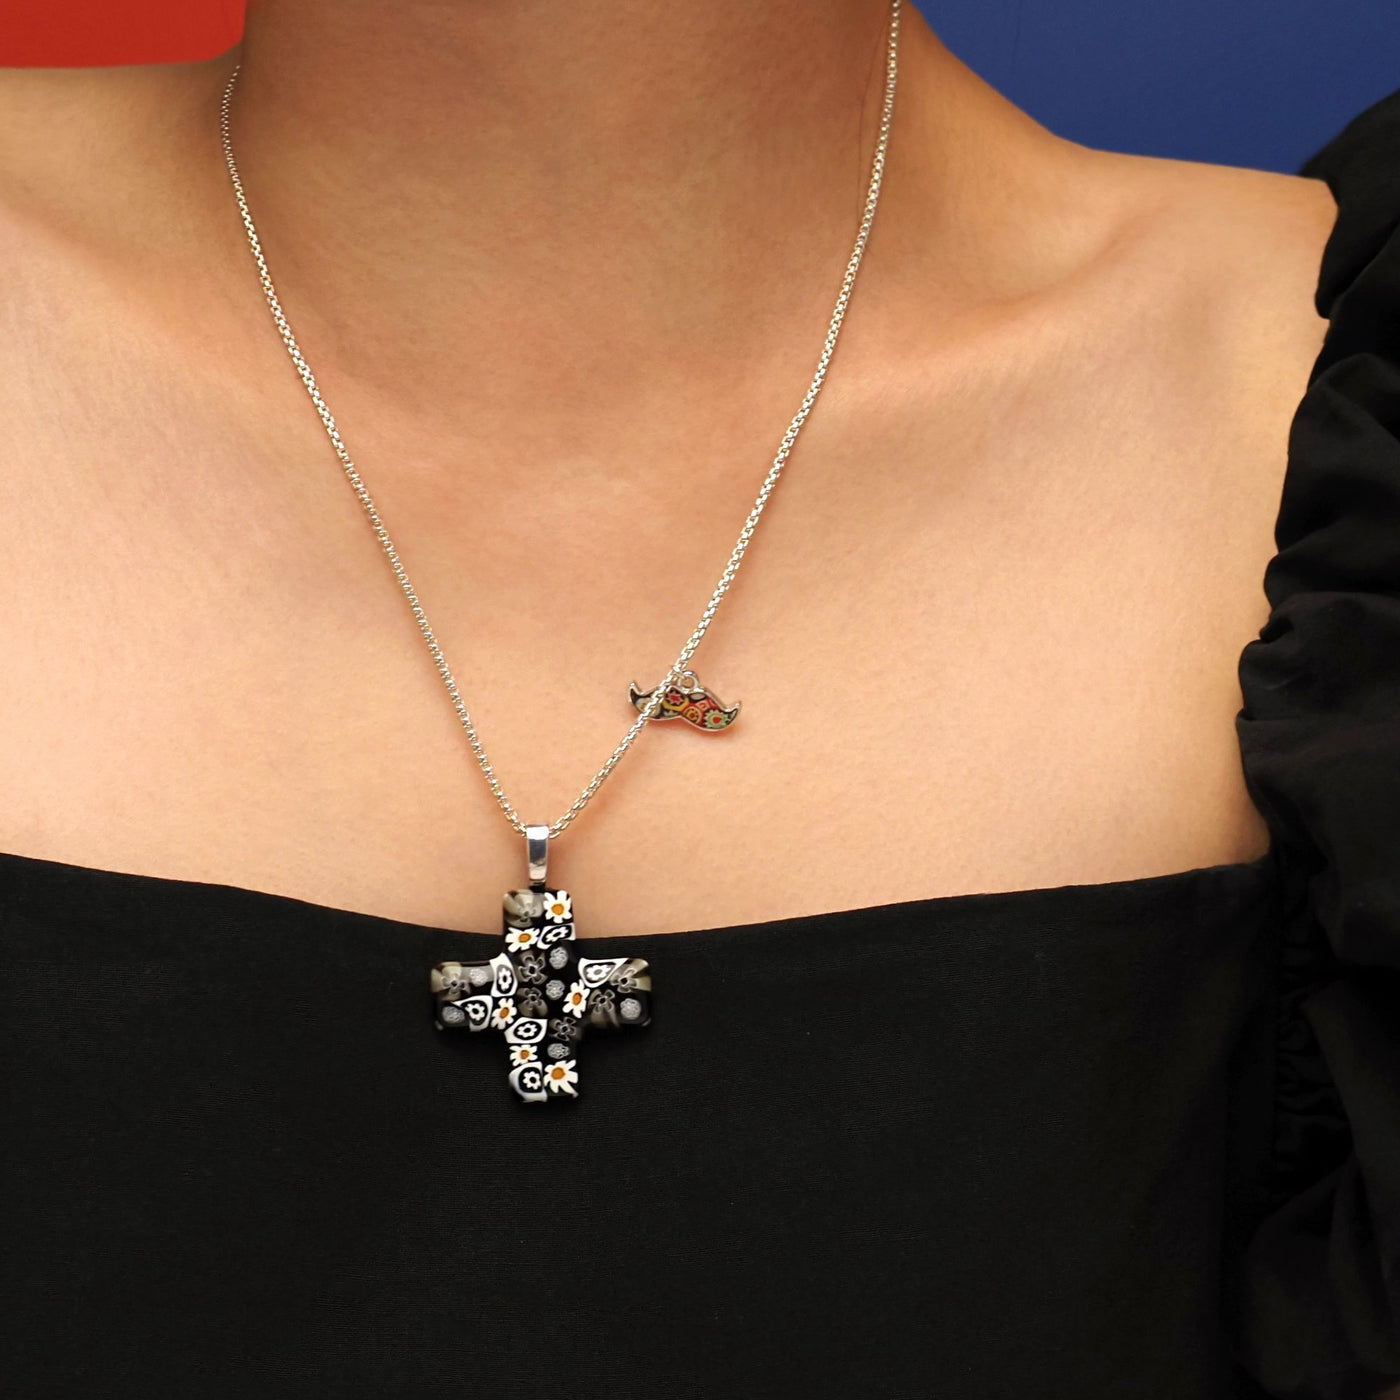 Artylish x Greek Cross Necklace - Multicolor - Pendant Necklace